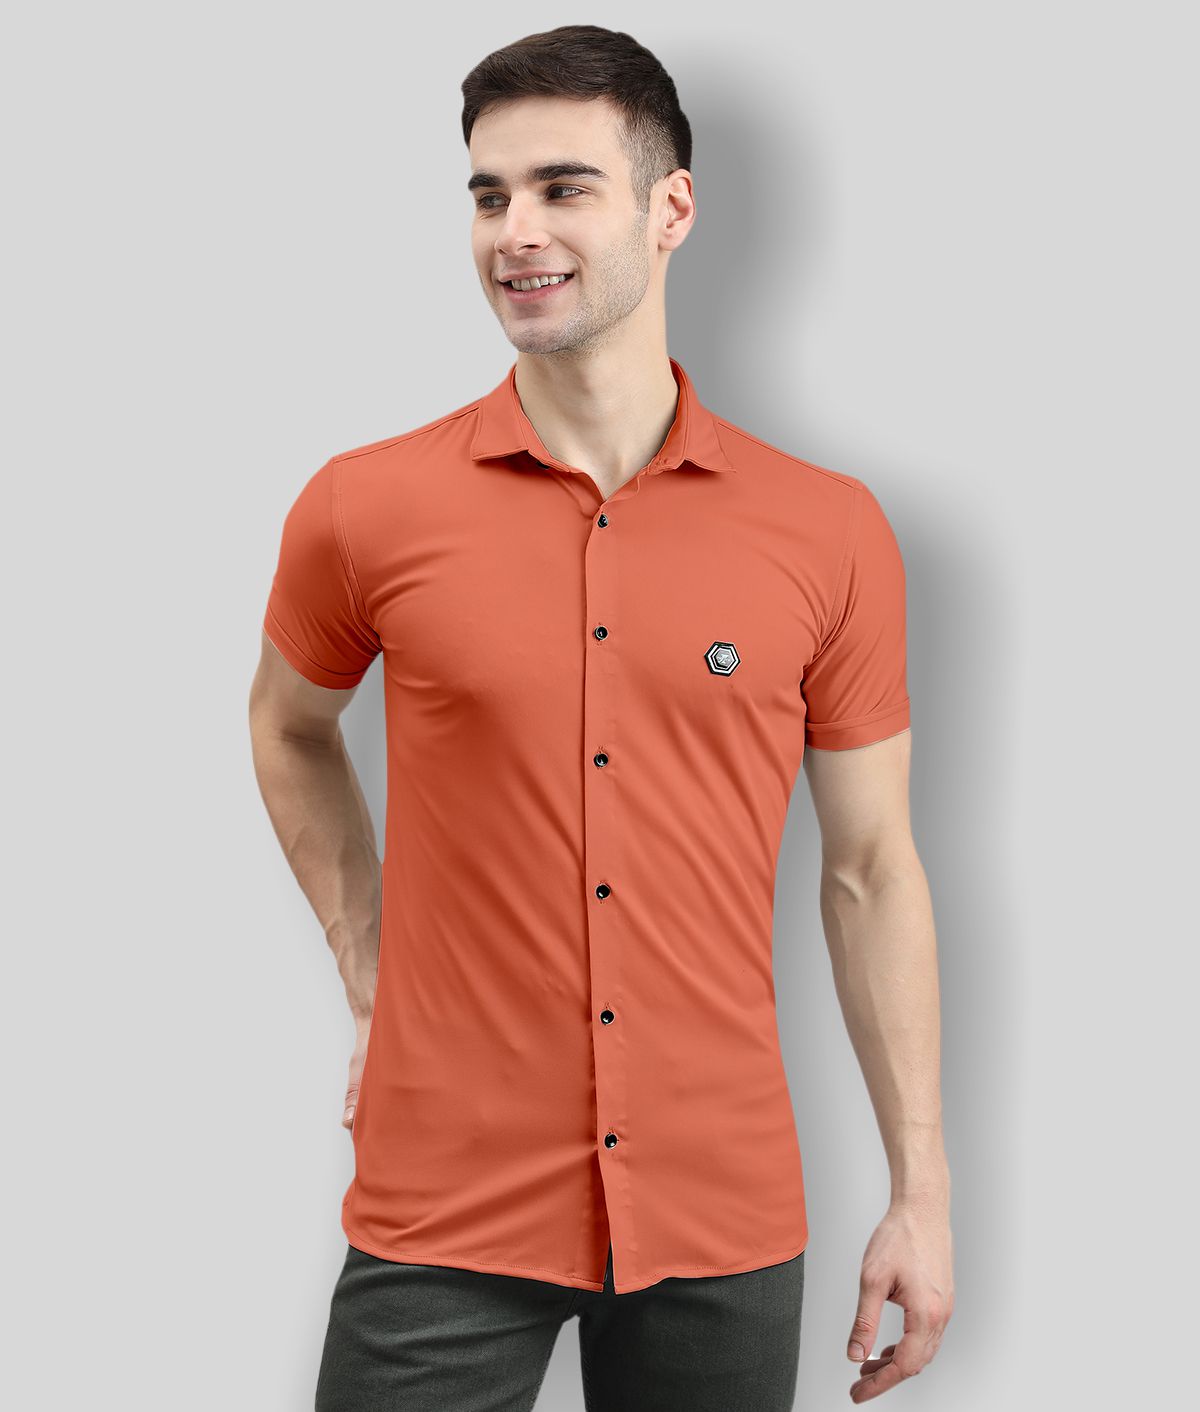     			INDICLUB - Orange Cotton Blend Slim Fit Men's Casual Shirt (Pack of 1)